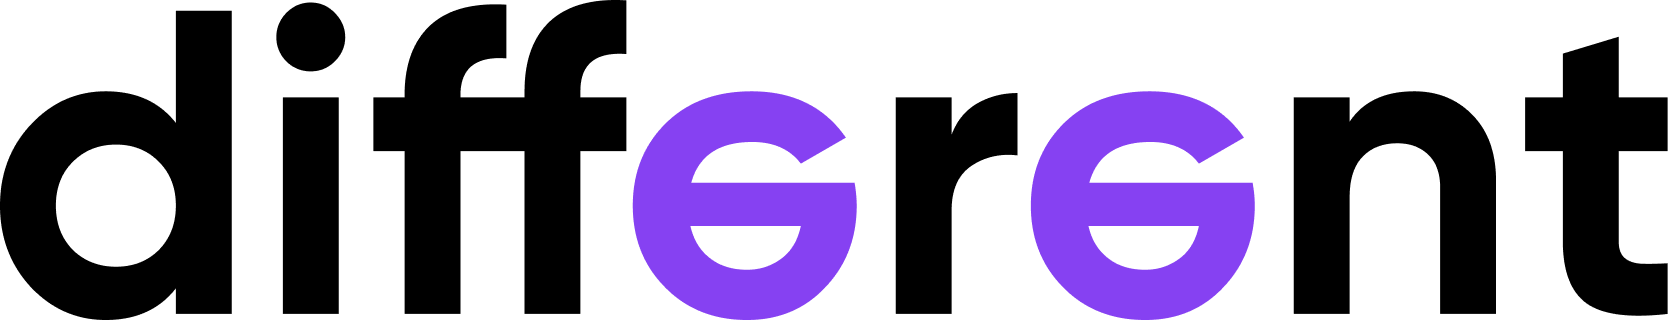 different logo